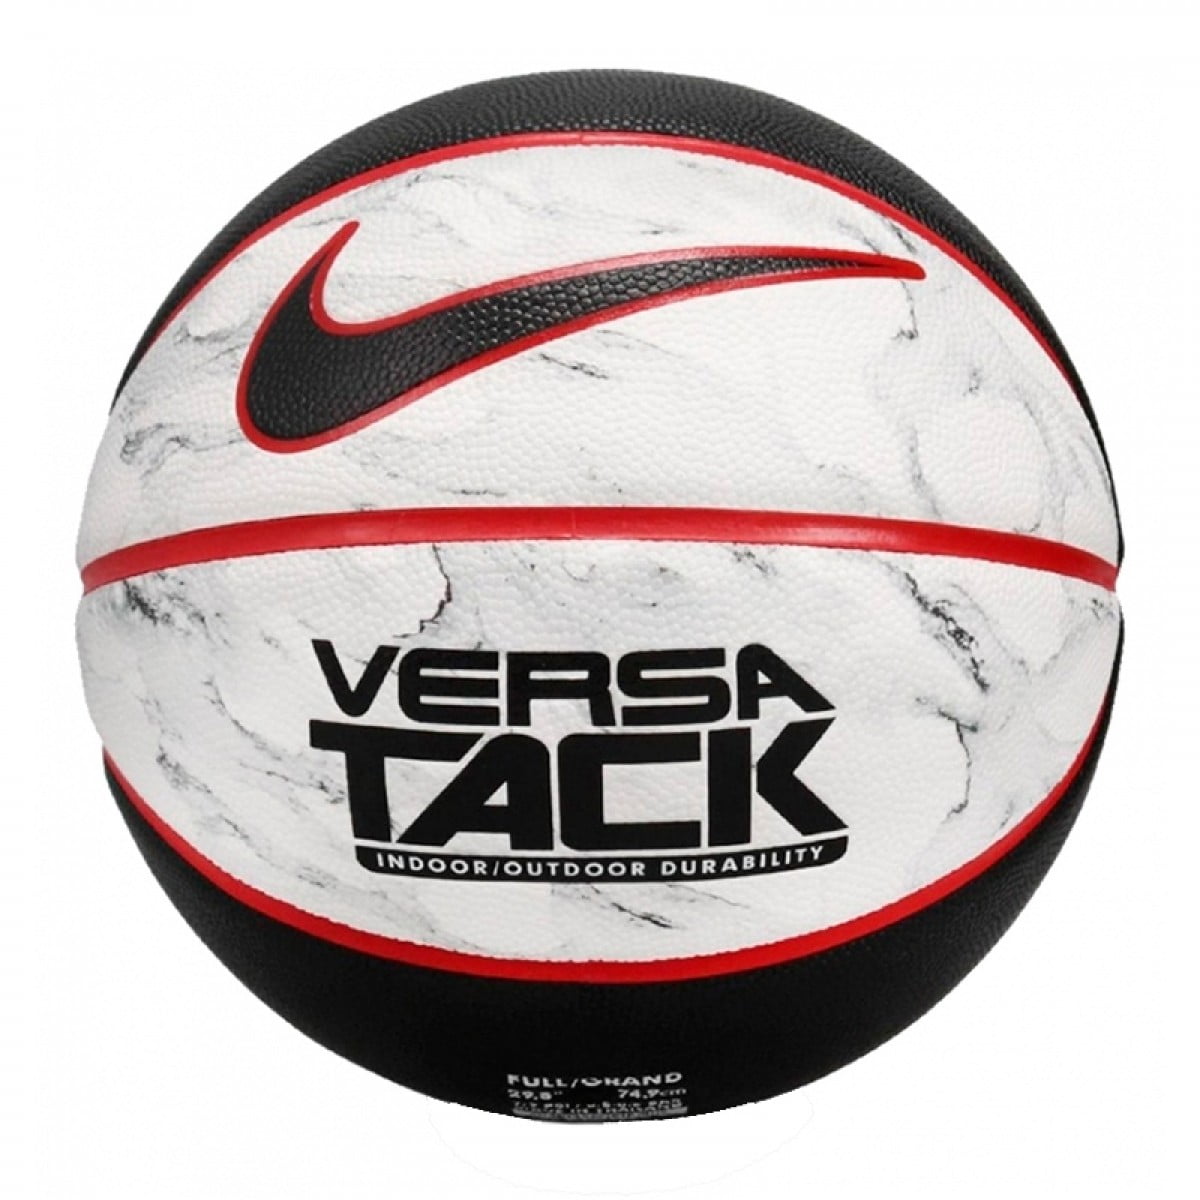 Nike Versa Tack Basketball White Marble Black Size: Full Size - Walmart.com